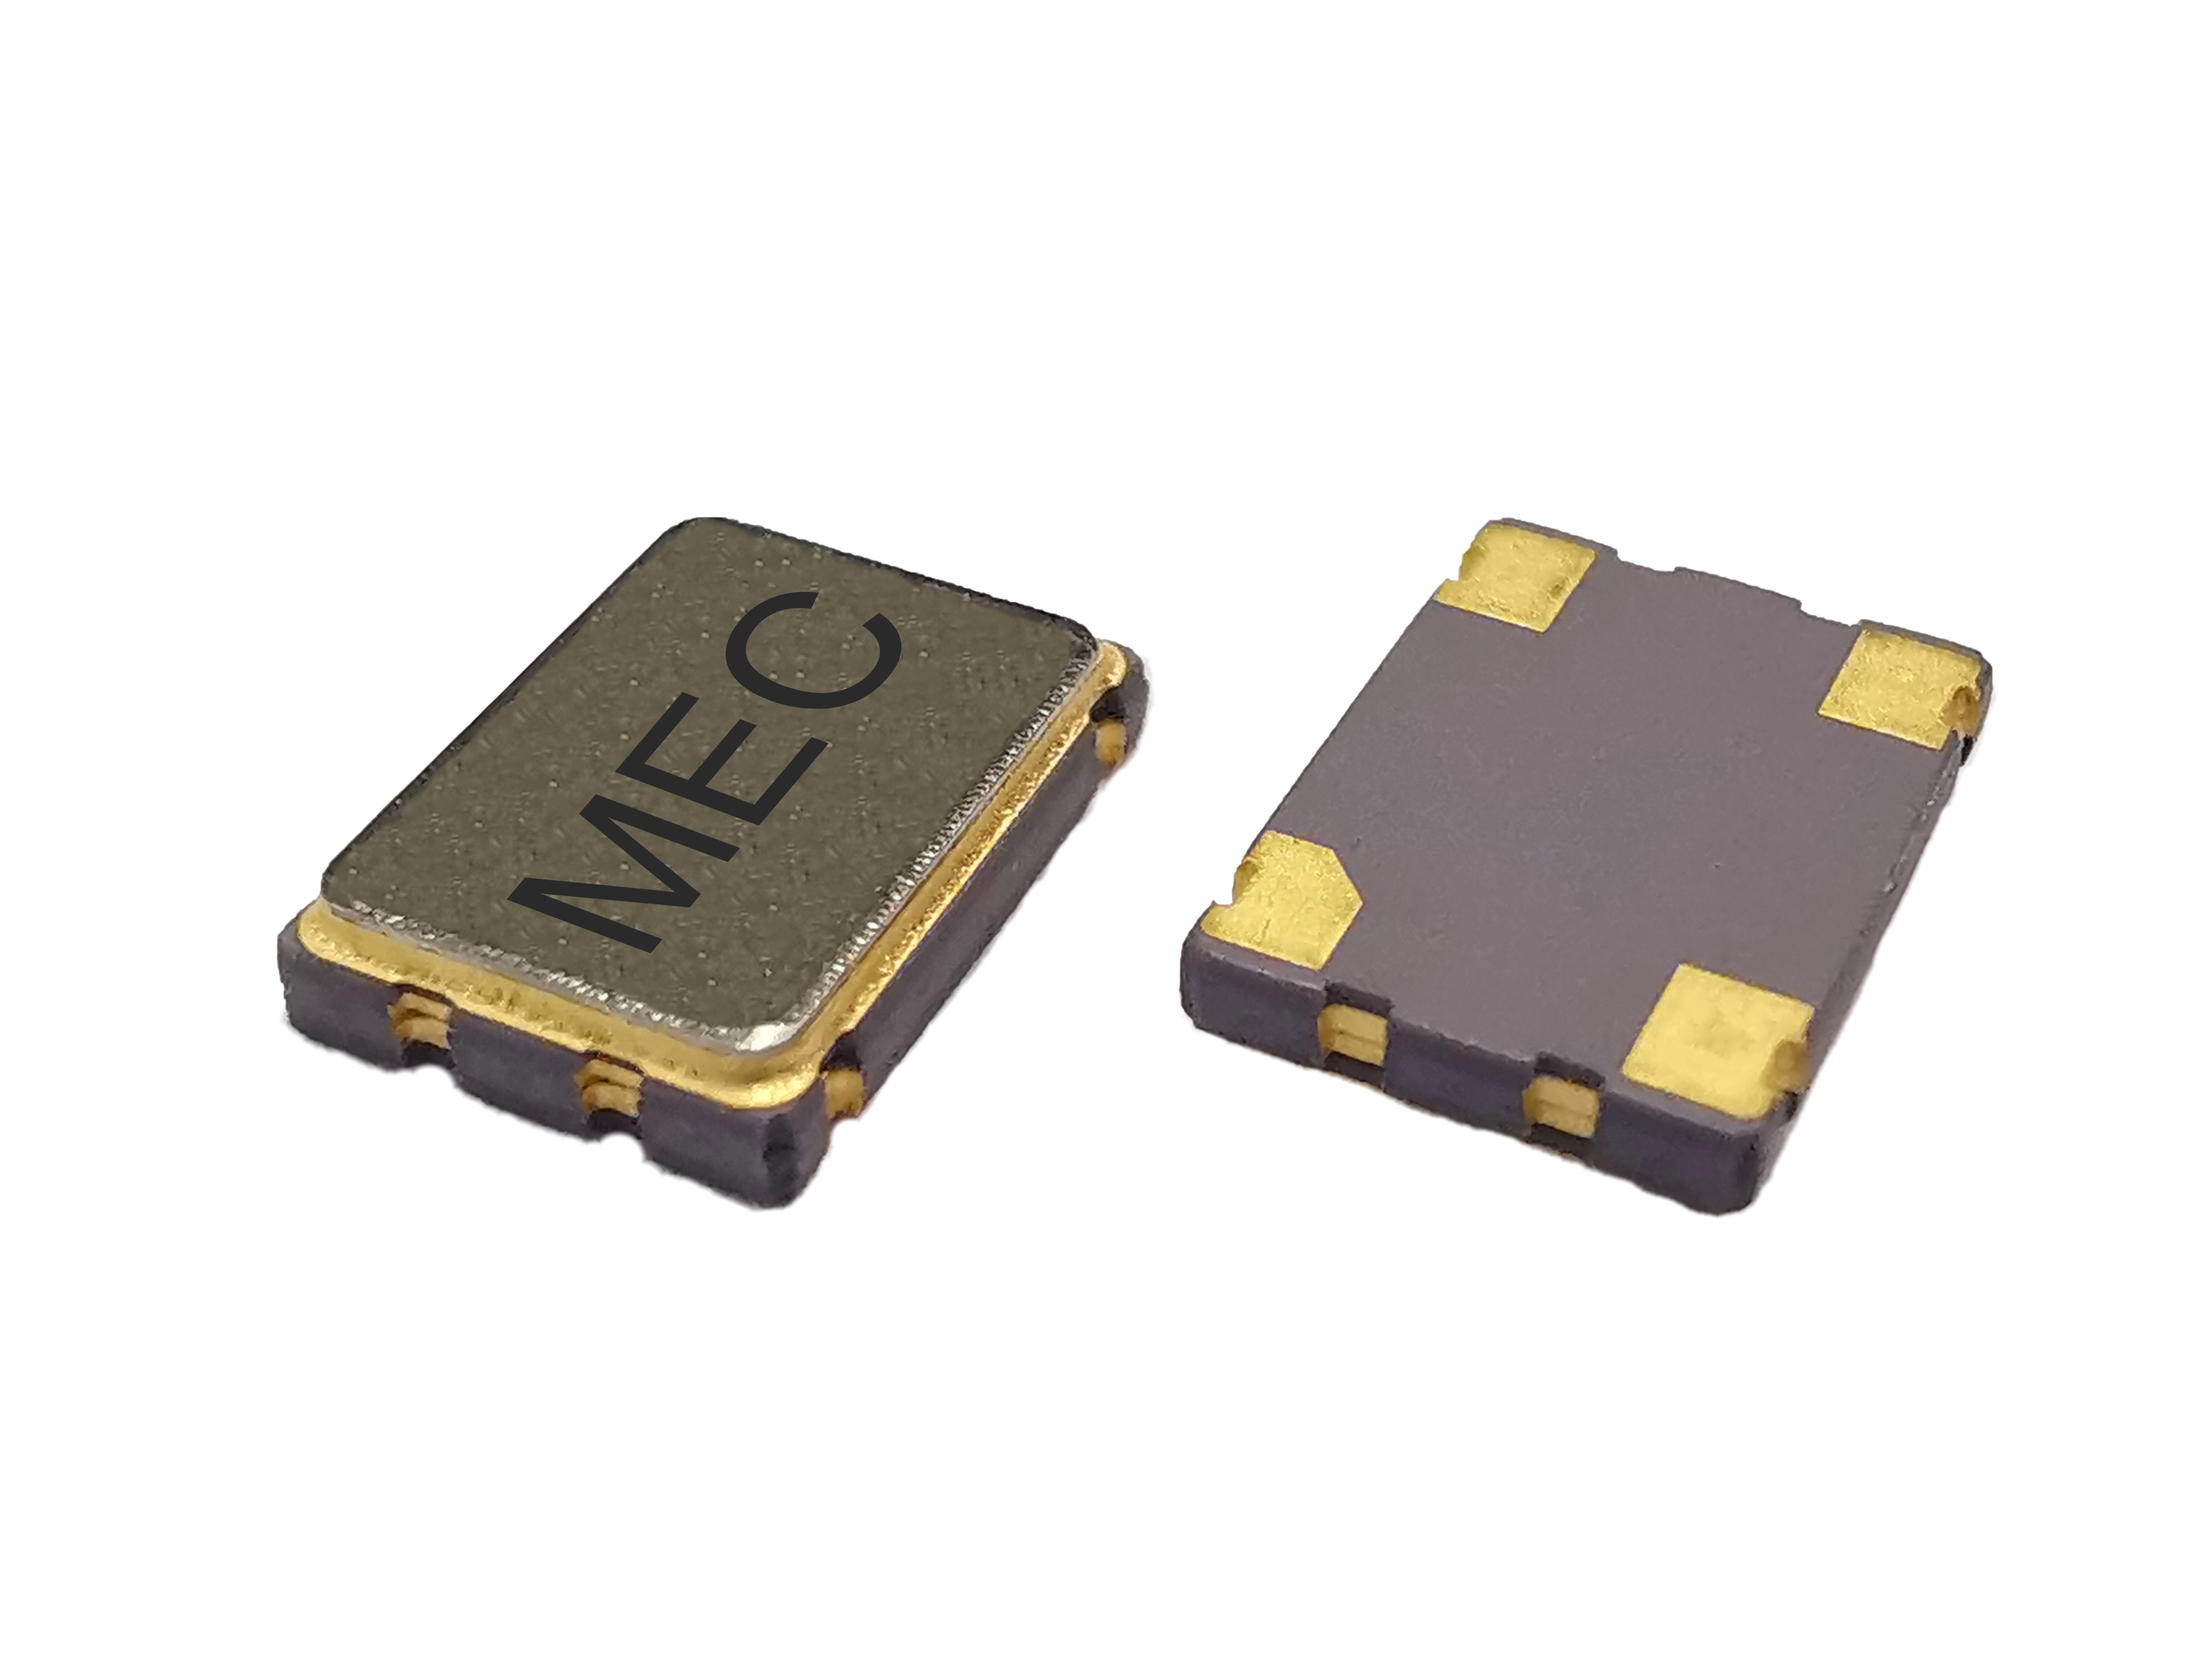 HA57 7050 1.8V 32.768KHz uA Low Current Consumption CMOS SMD Crystal Oscillator